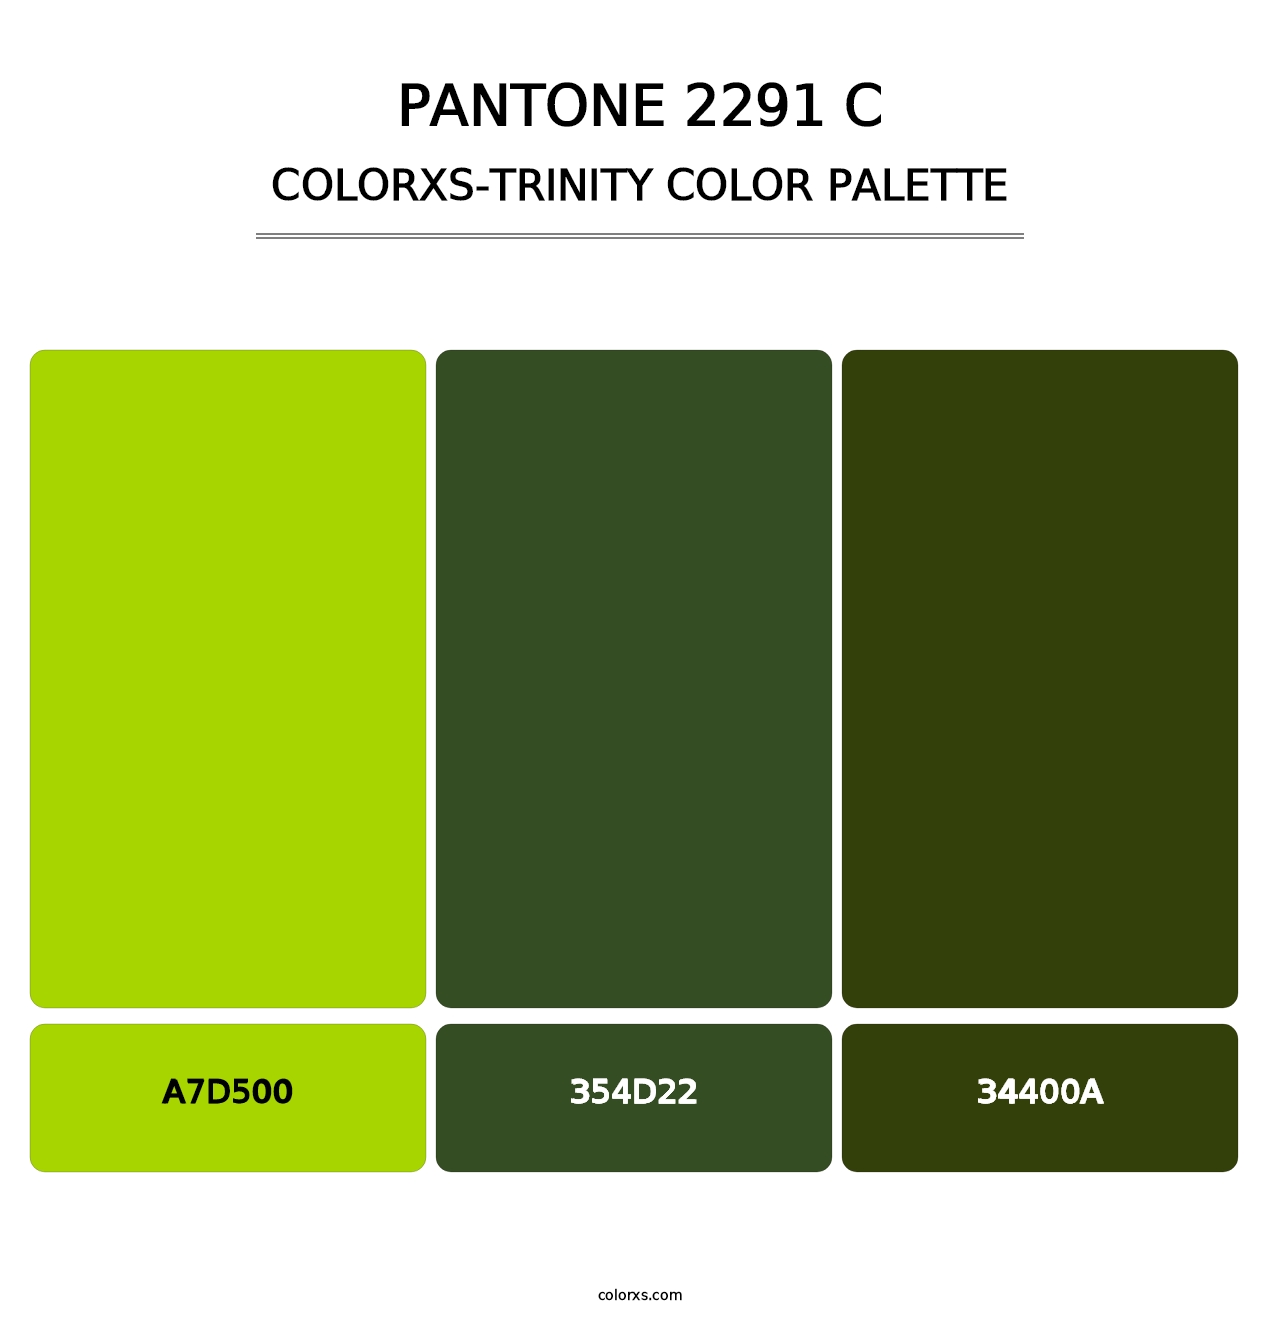 PANTONE 2291 C - Colorxs Trinity Palette